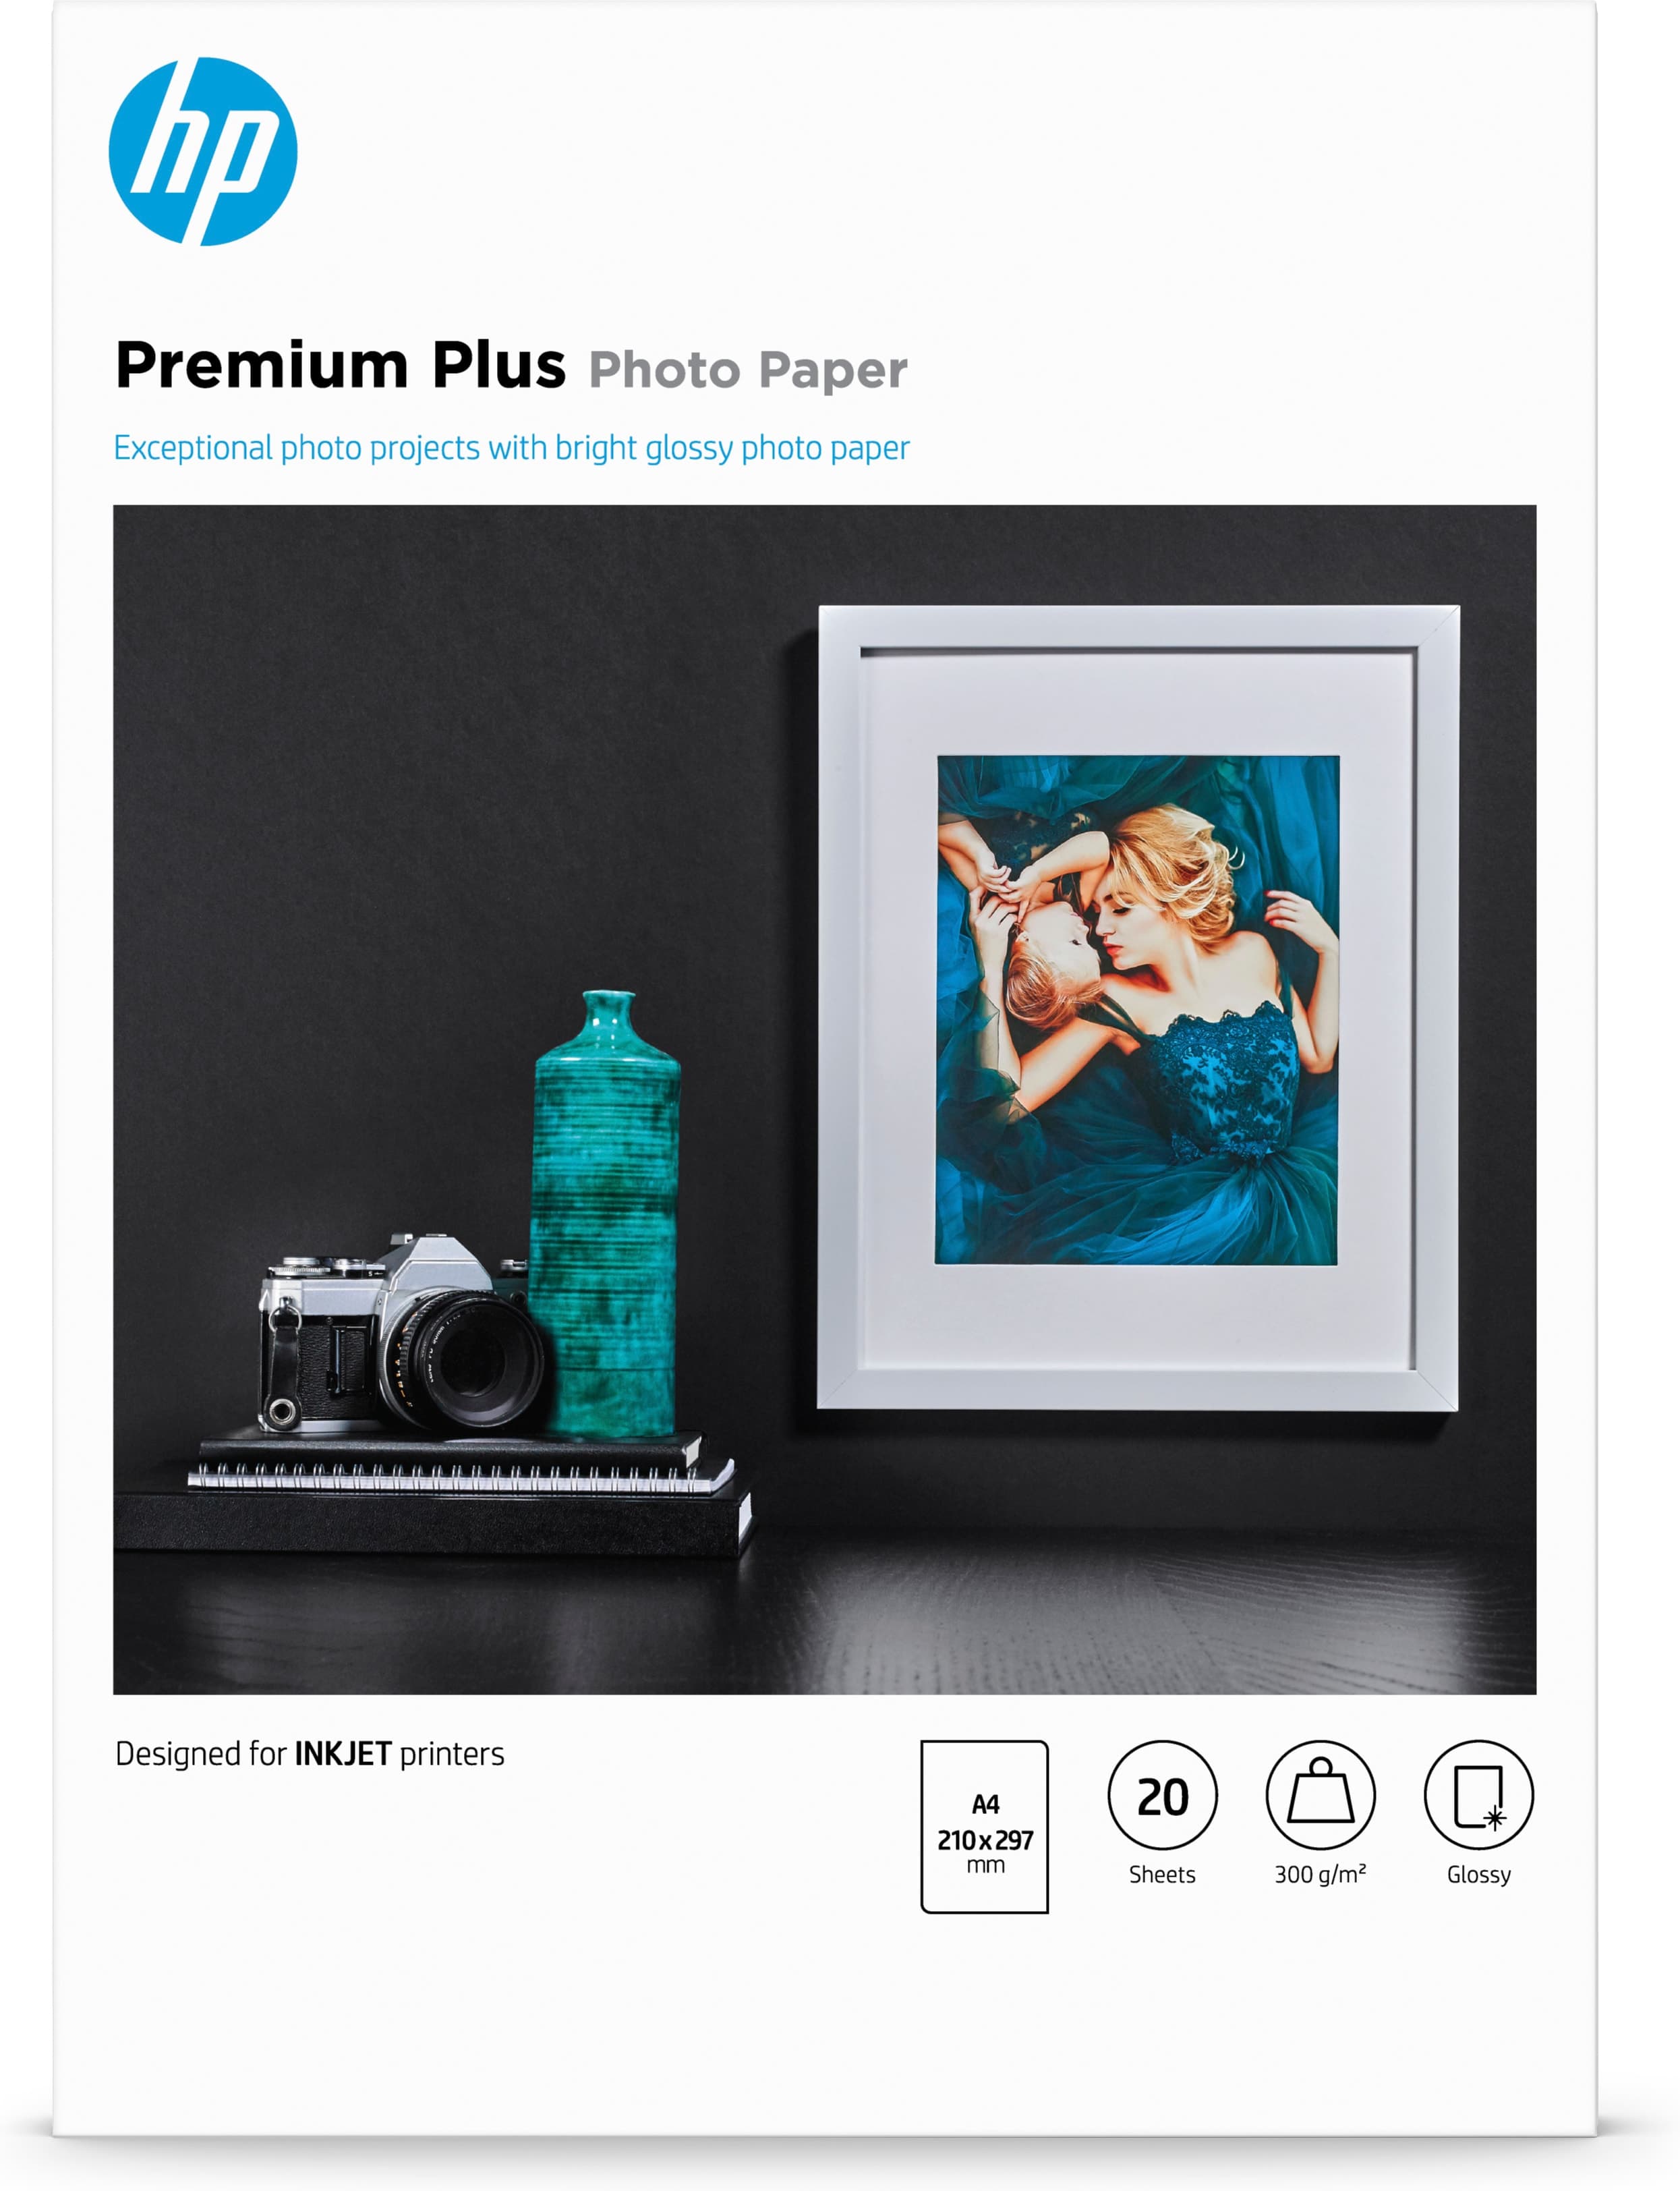 HP DeskJet Premium Plus Photo Paper A4 Foto-Papier - 300 g/m² - 210x297 mm - 20 Blatt